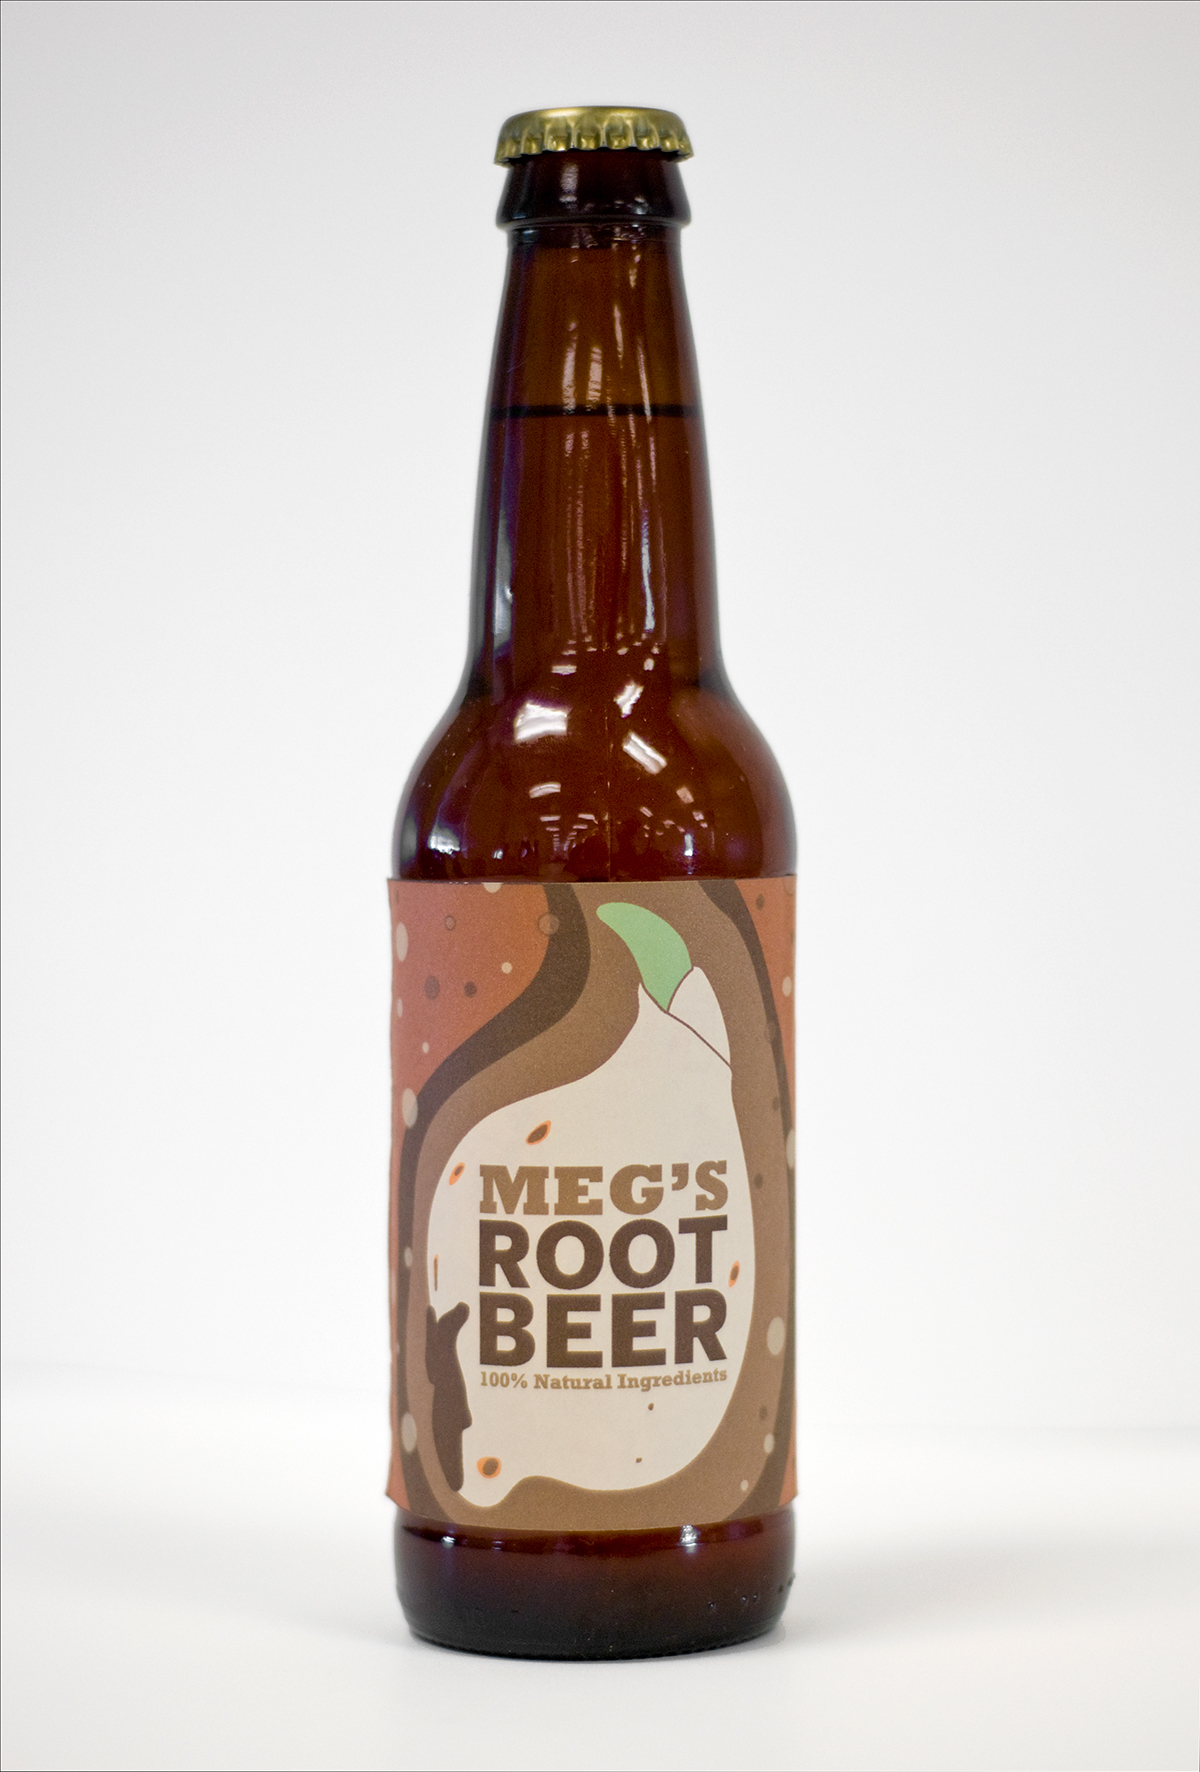 Adobe Portfolio root beer root bulb color